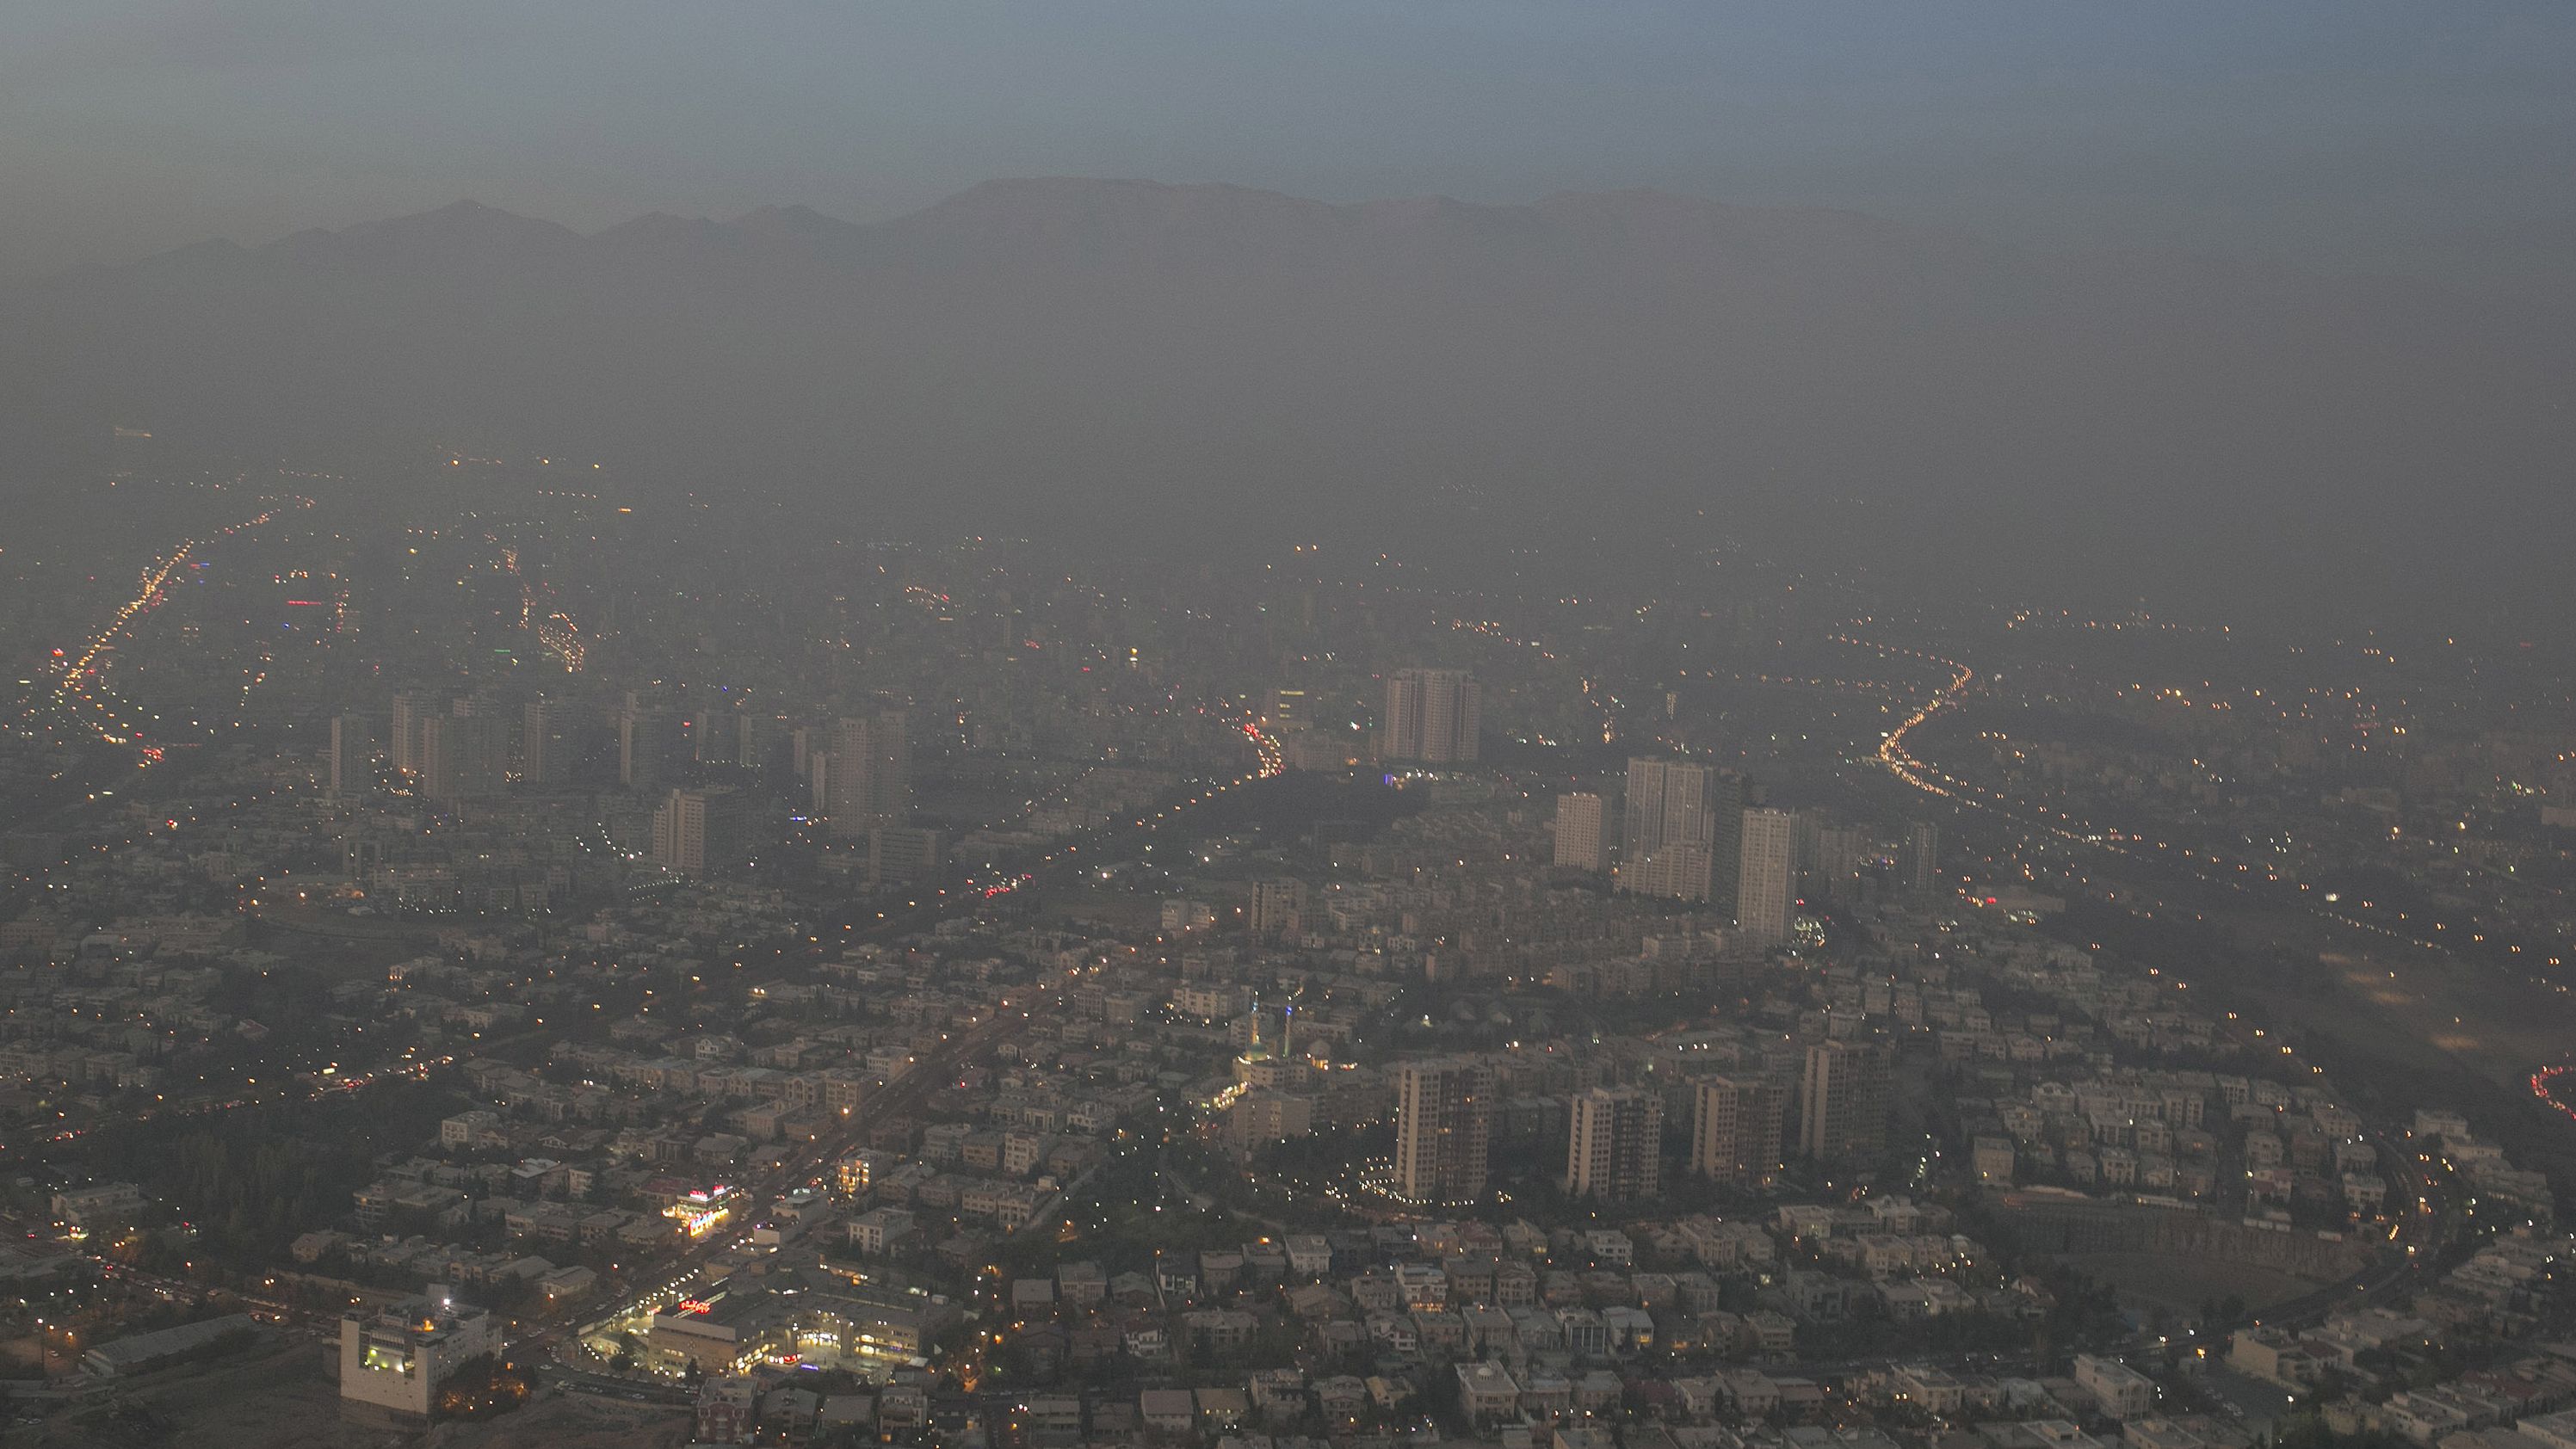 A view of smog-enveloped Tehran on November 14, 2016.